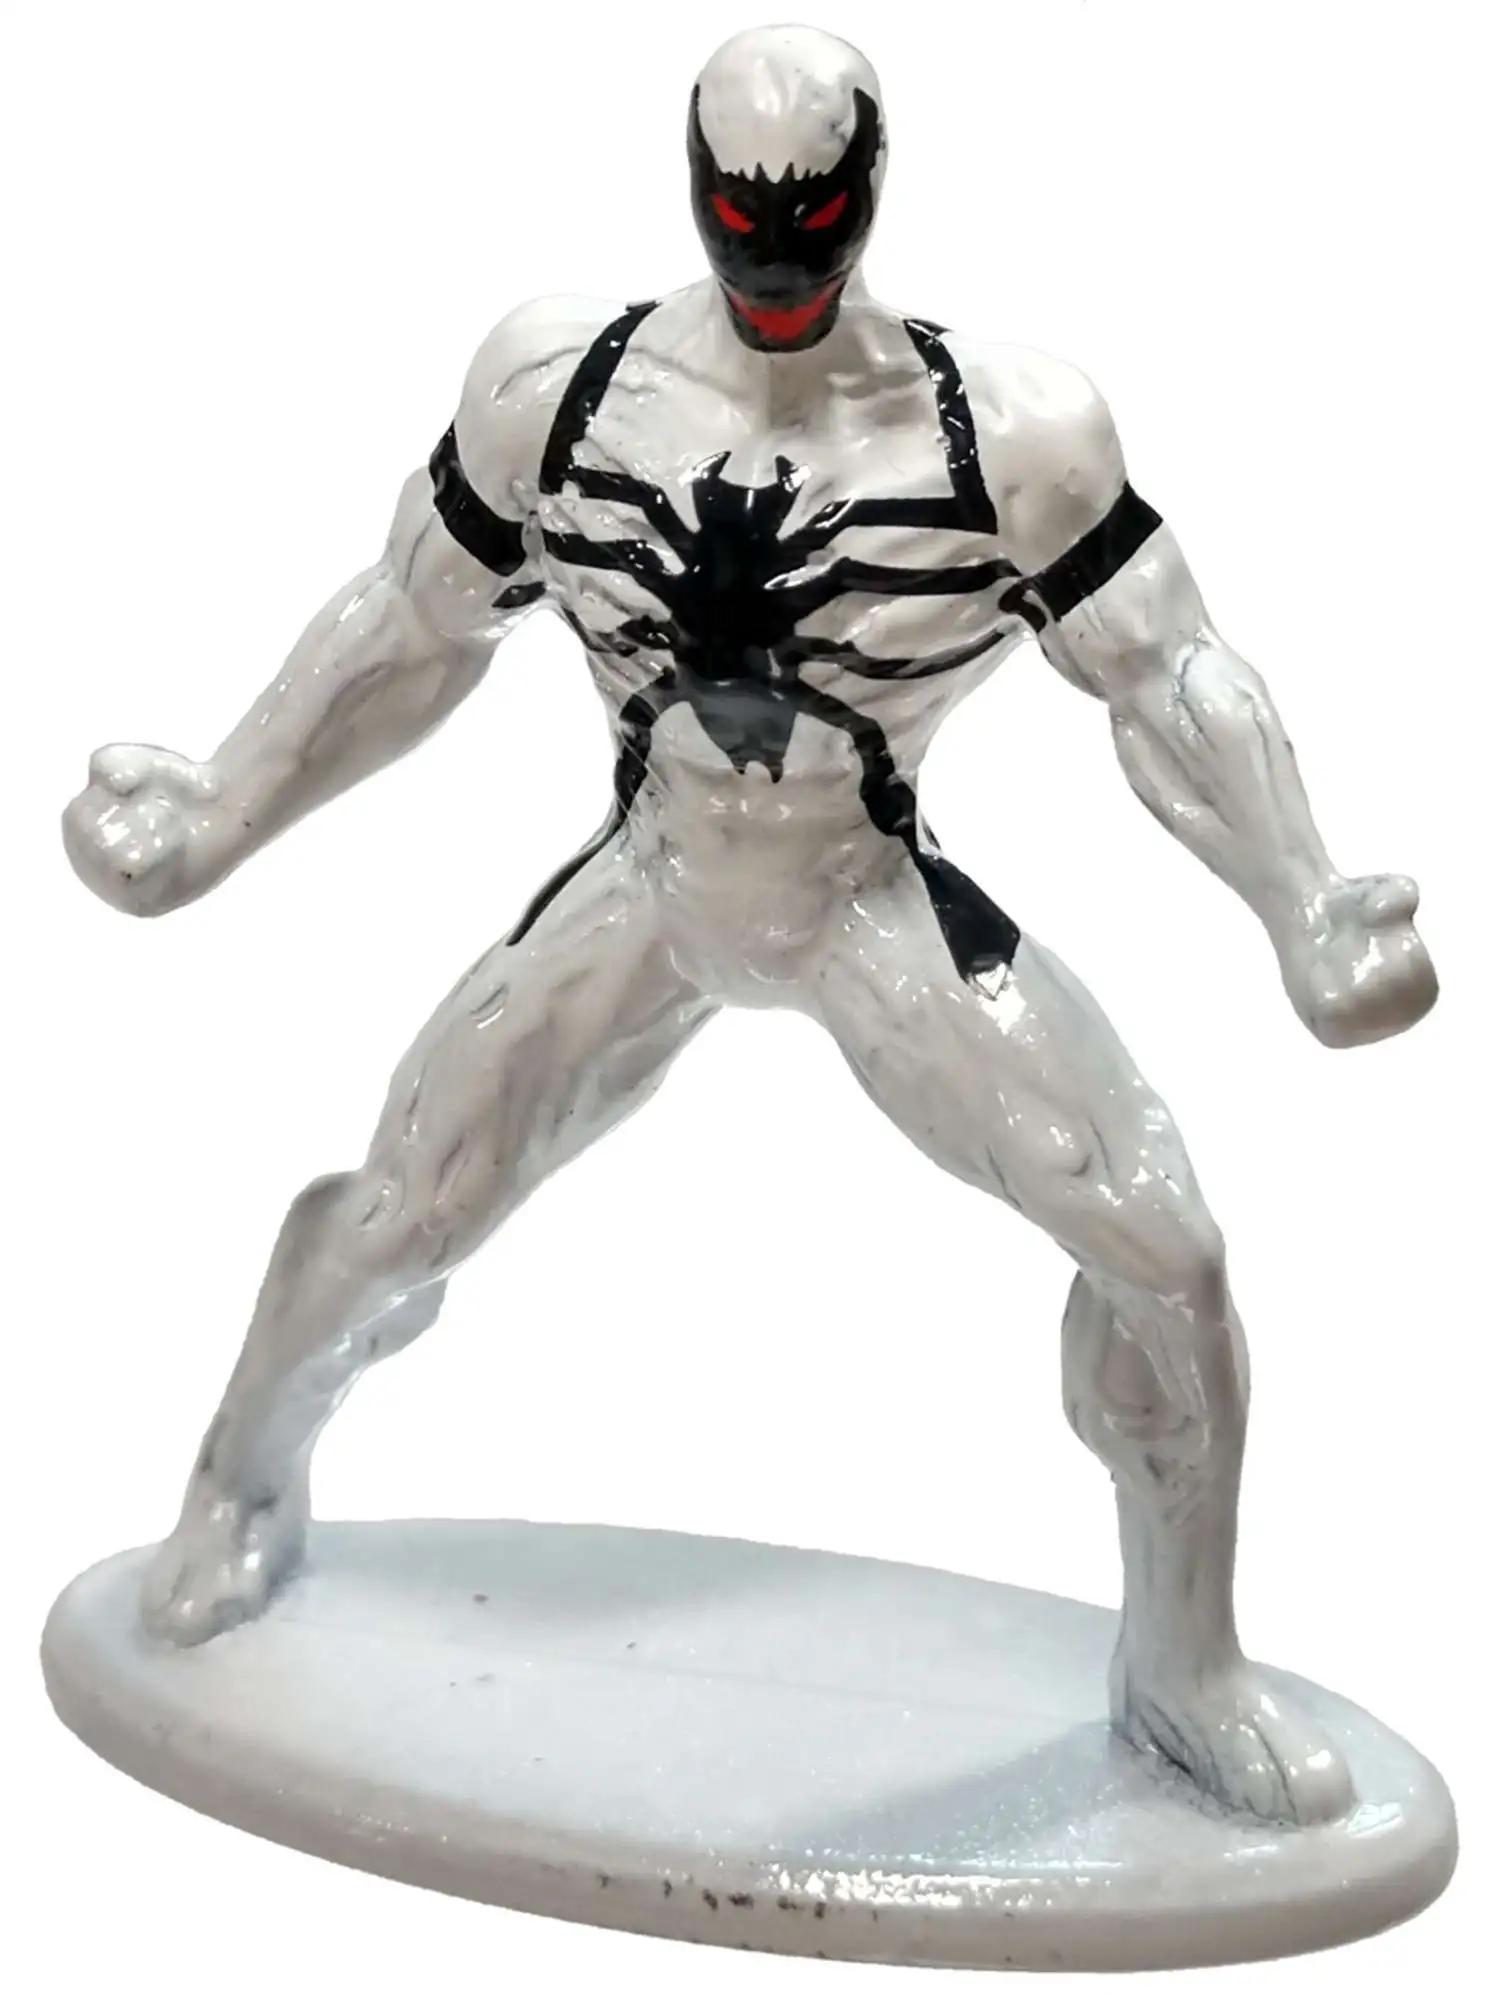 NANO METALFIGS Metal Miniature Figures Marvel Avengers Spiderman Mini NEW 